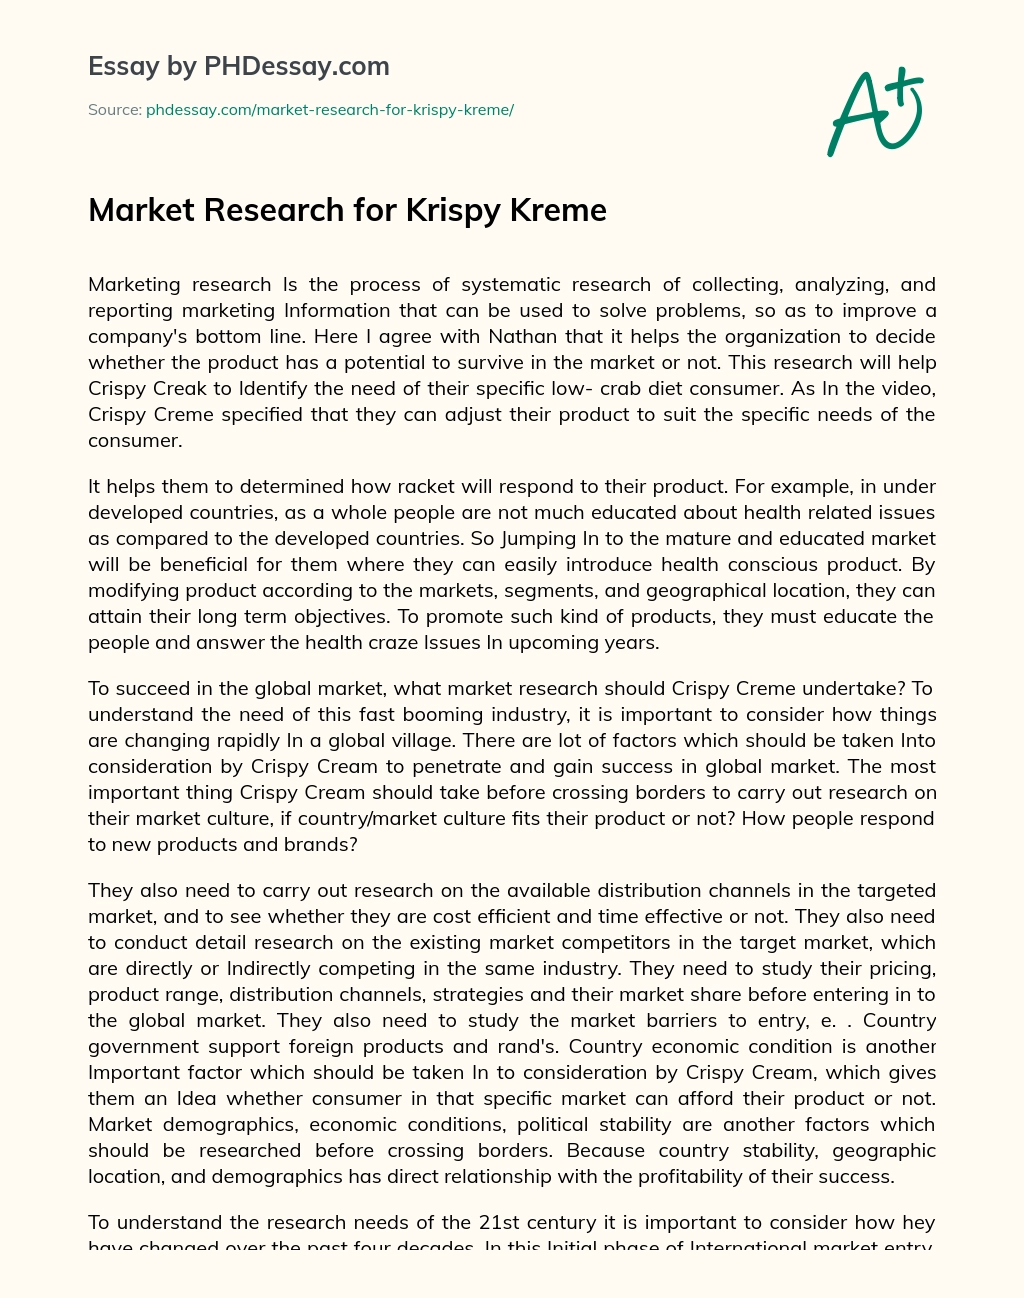 Market Research for Krispy Kreme essay